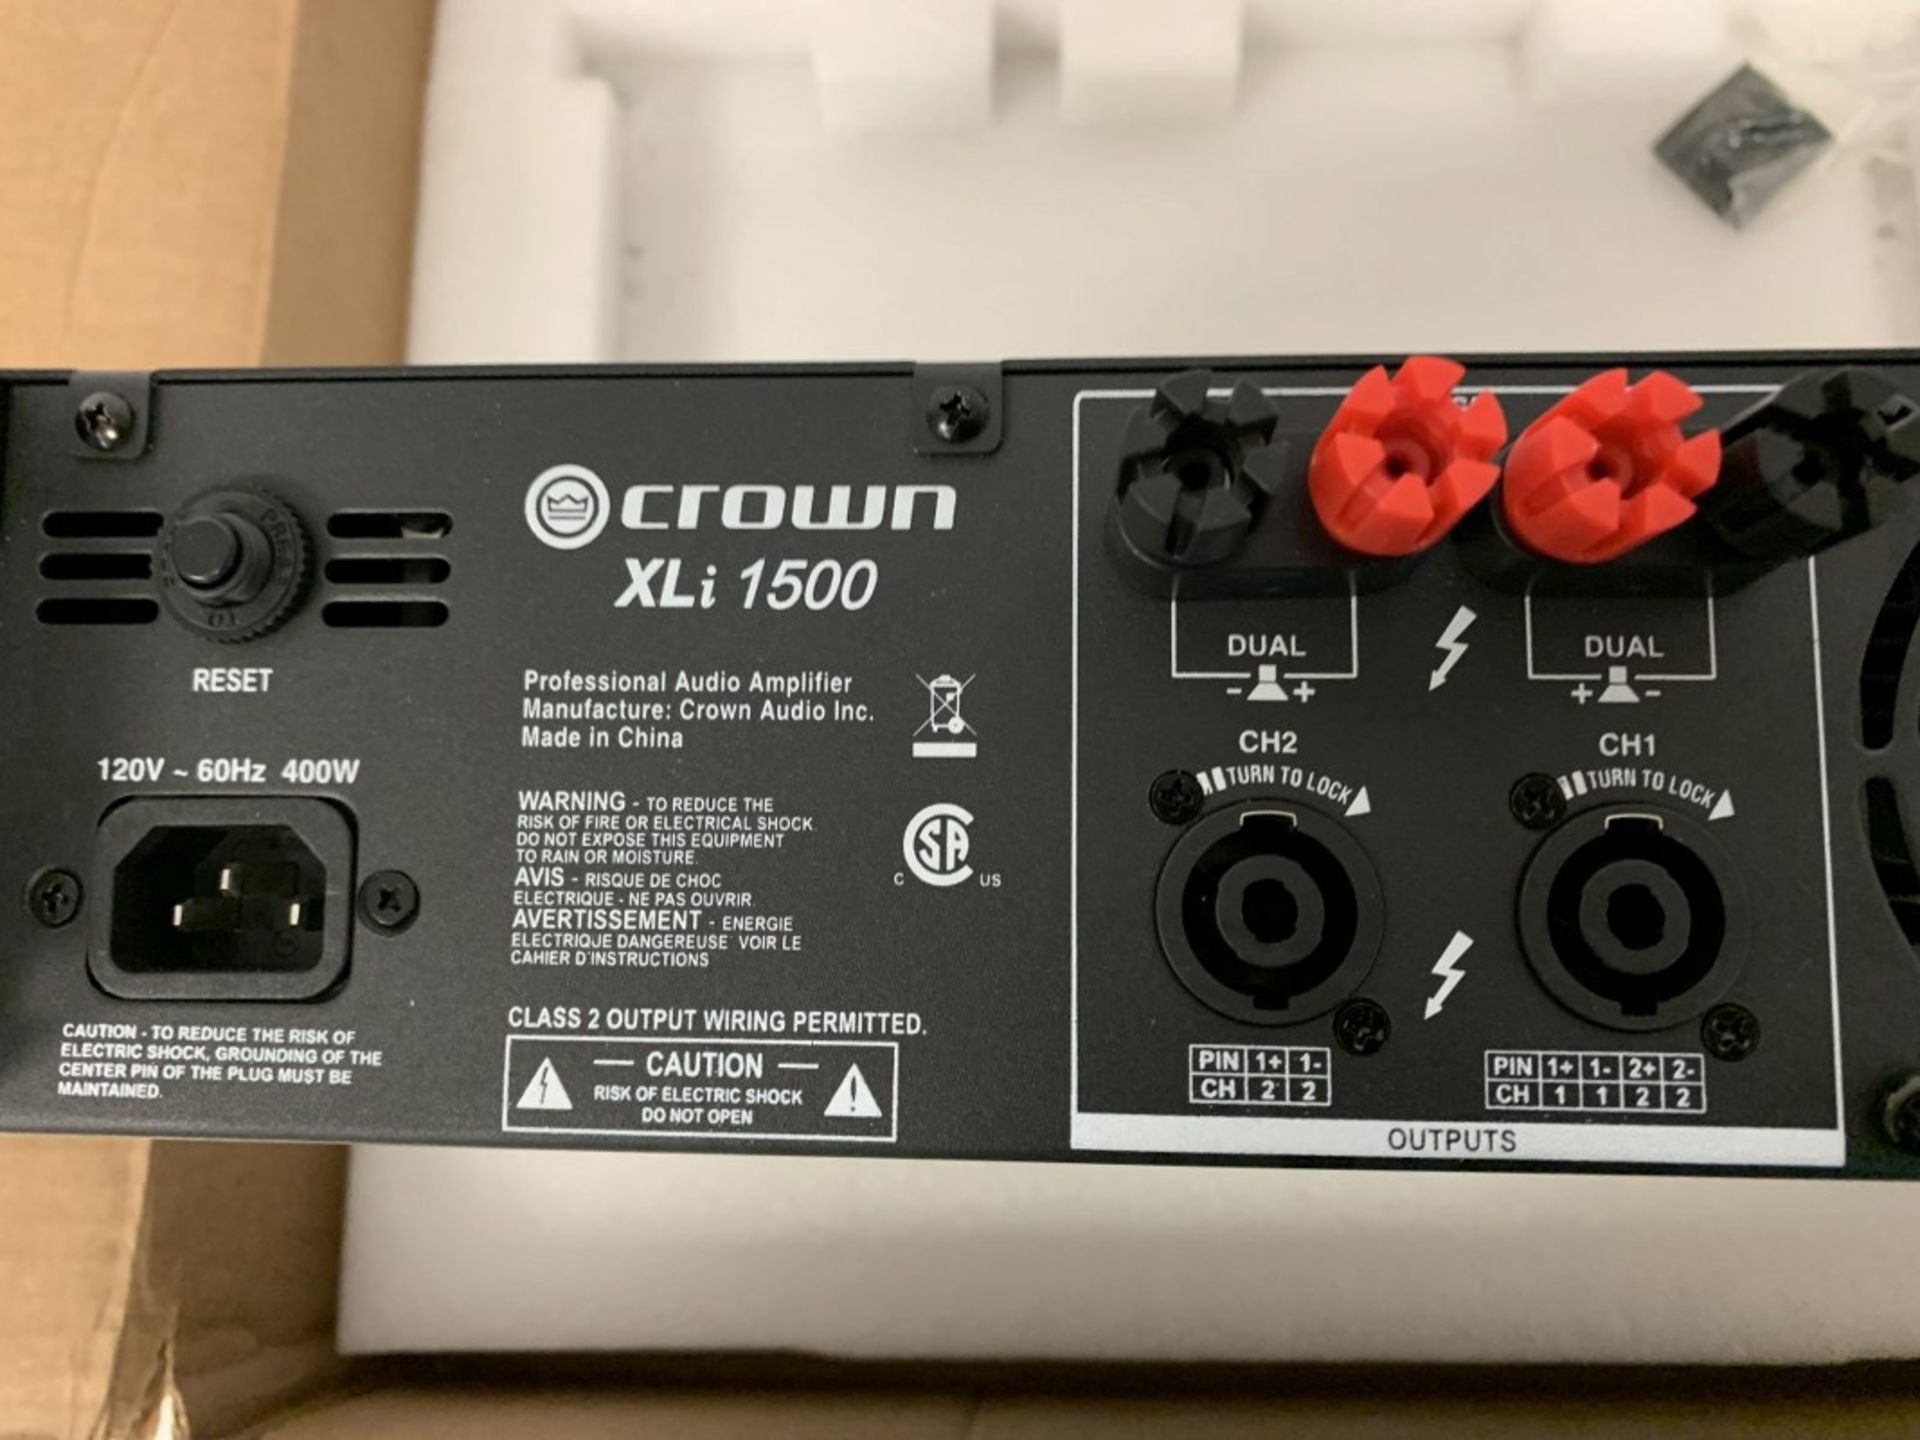 Crown - Xli1500 - Professional Audio Amplifier - Image 3 of 5